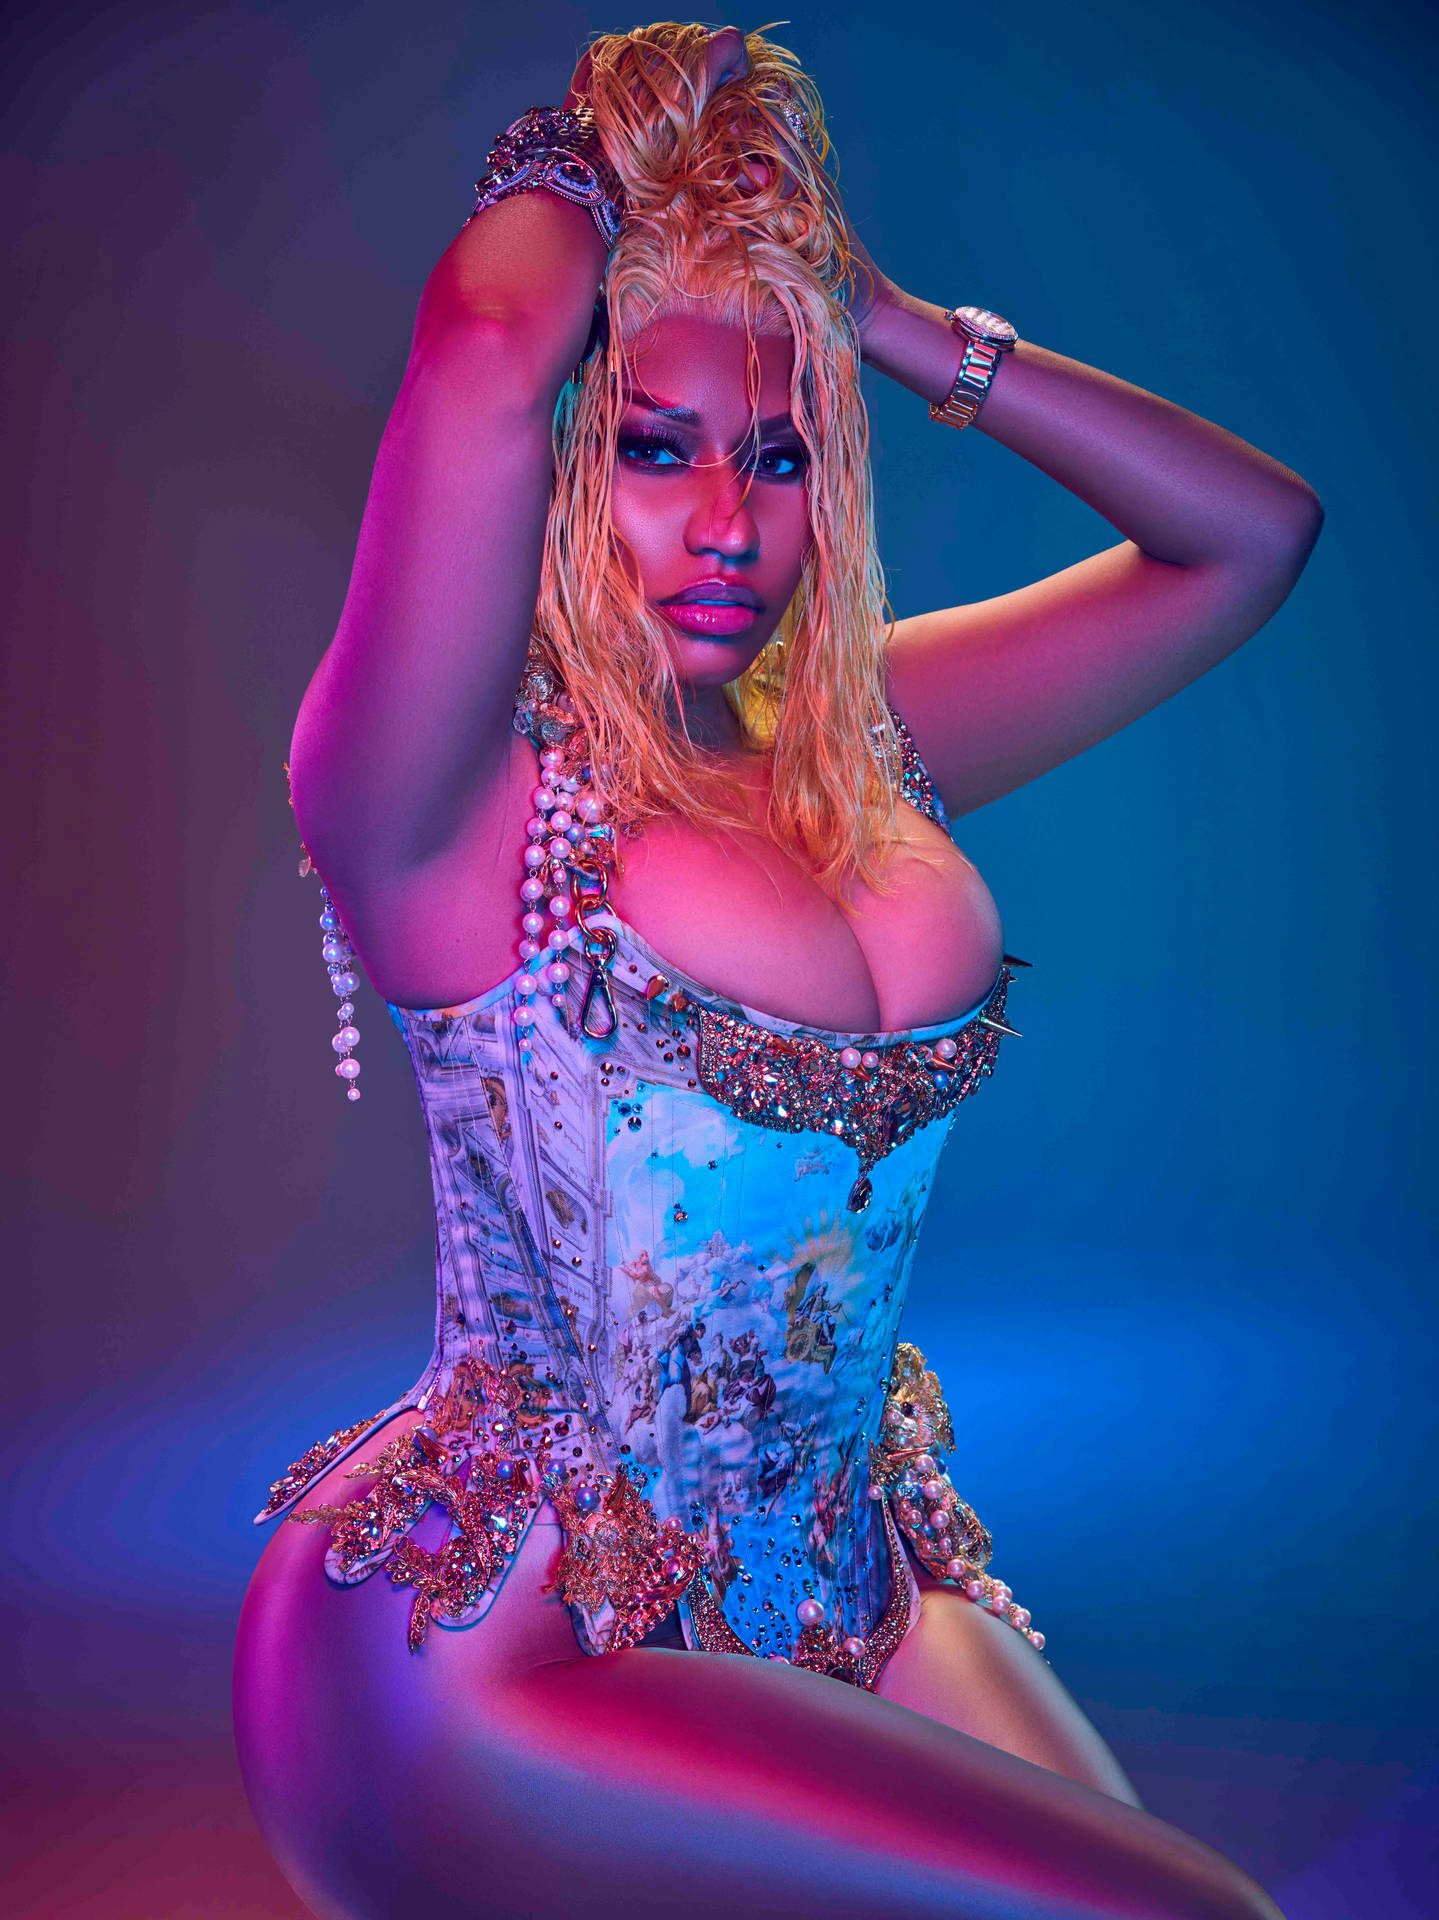 Pinkand Blue Nicki Minaj Hd - Rosa Och Blå Nicki Minaj Hd Wallpaper